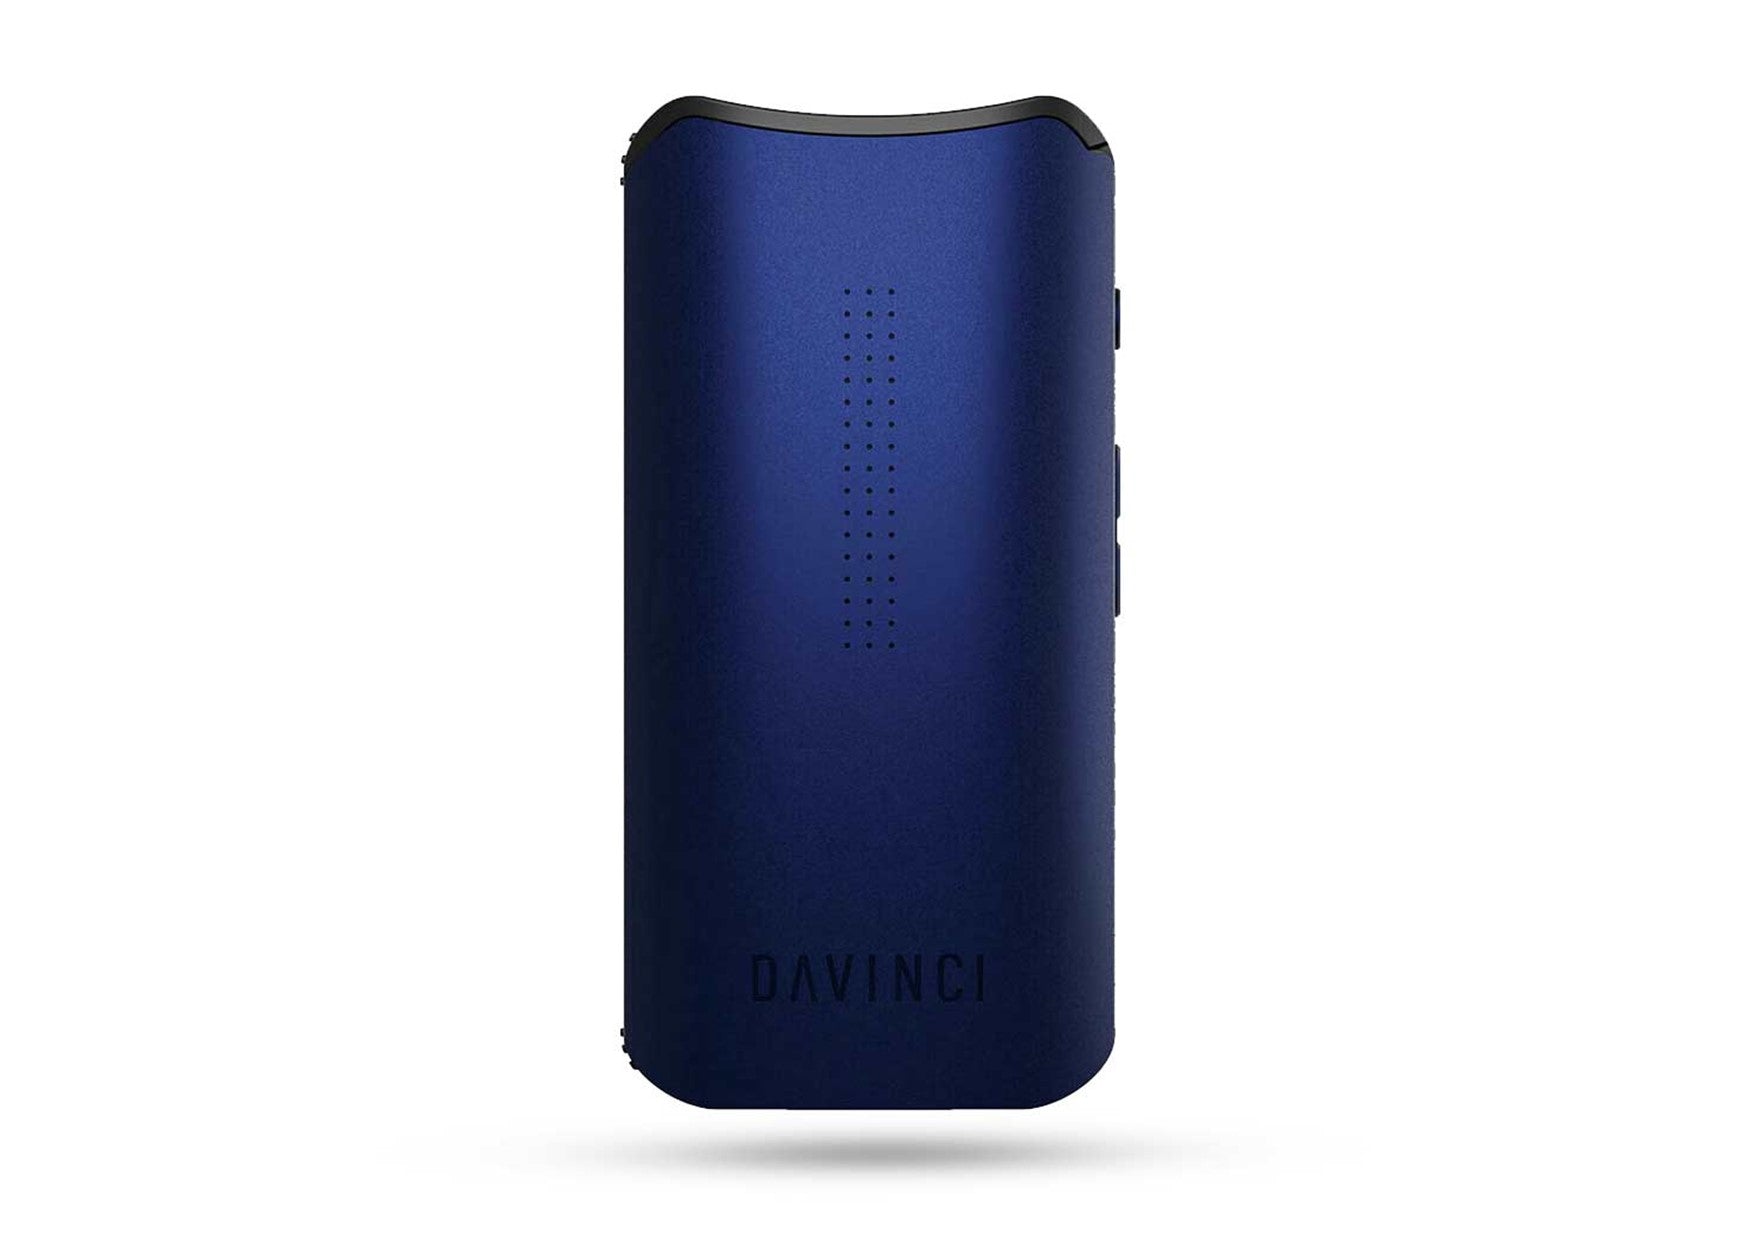 Davinci | IQC Portable Dry Herb Vaporizer